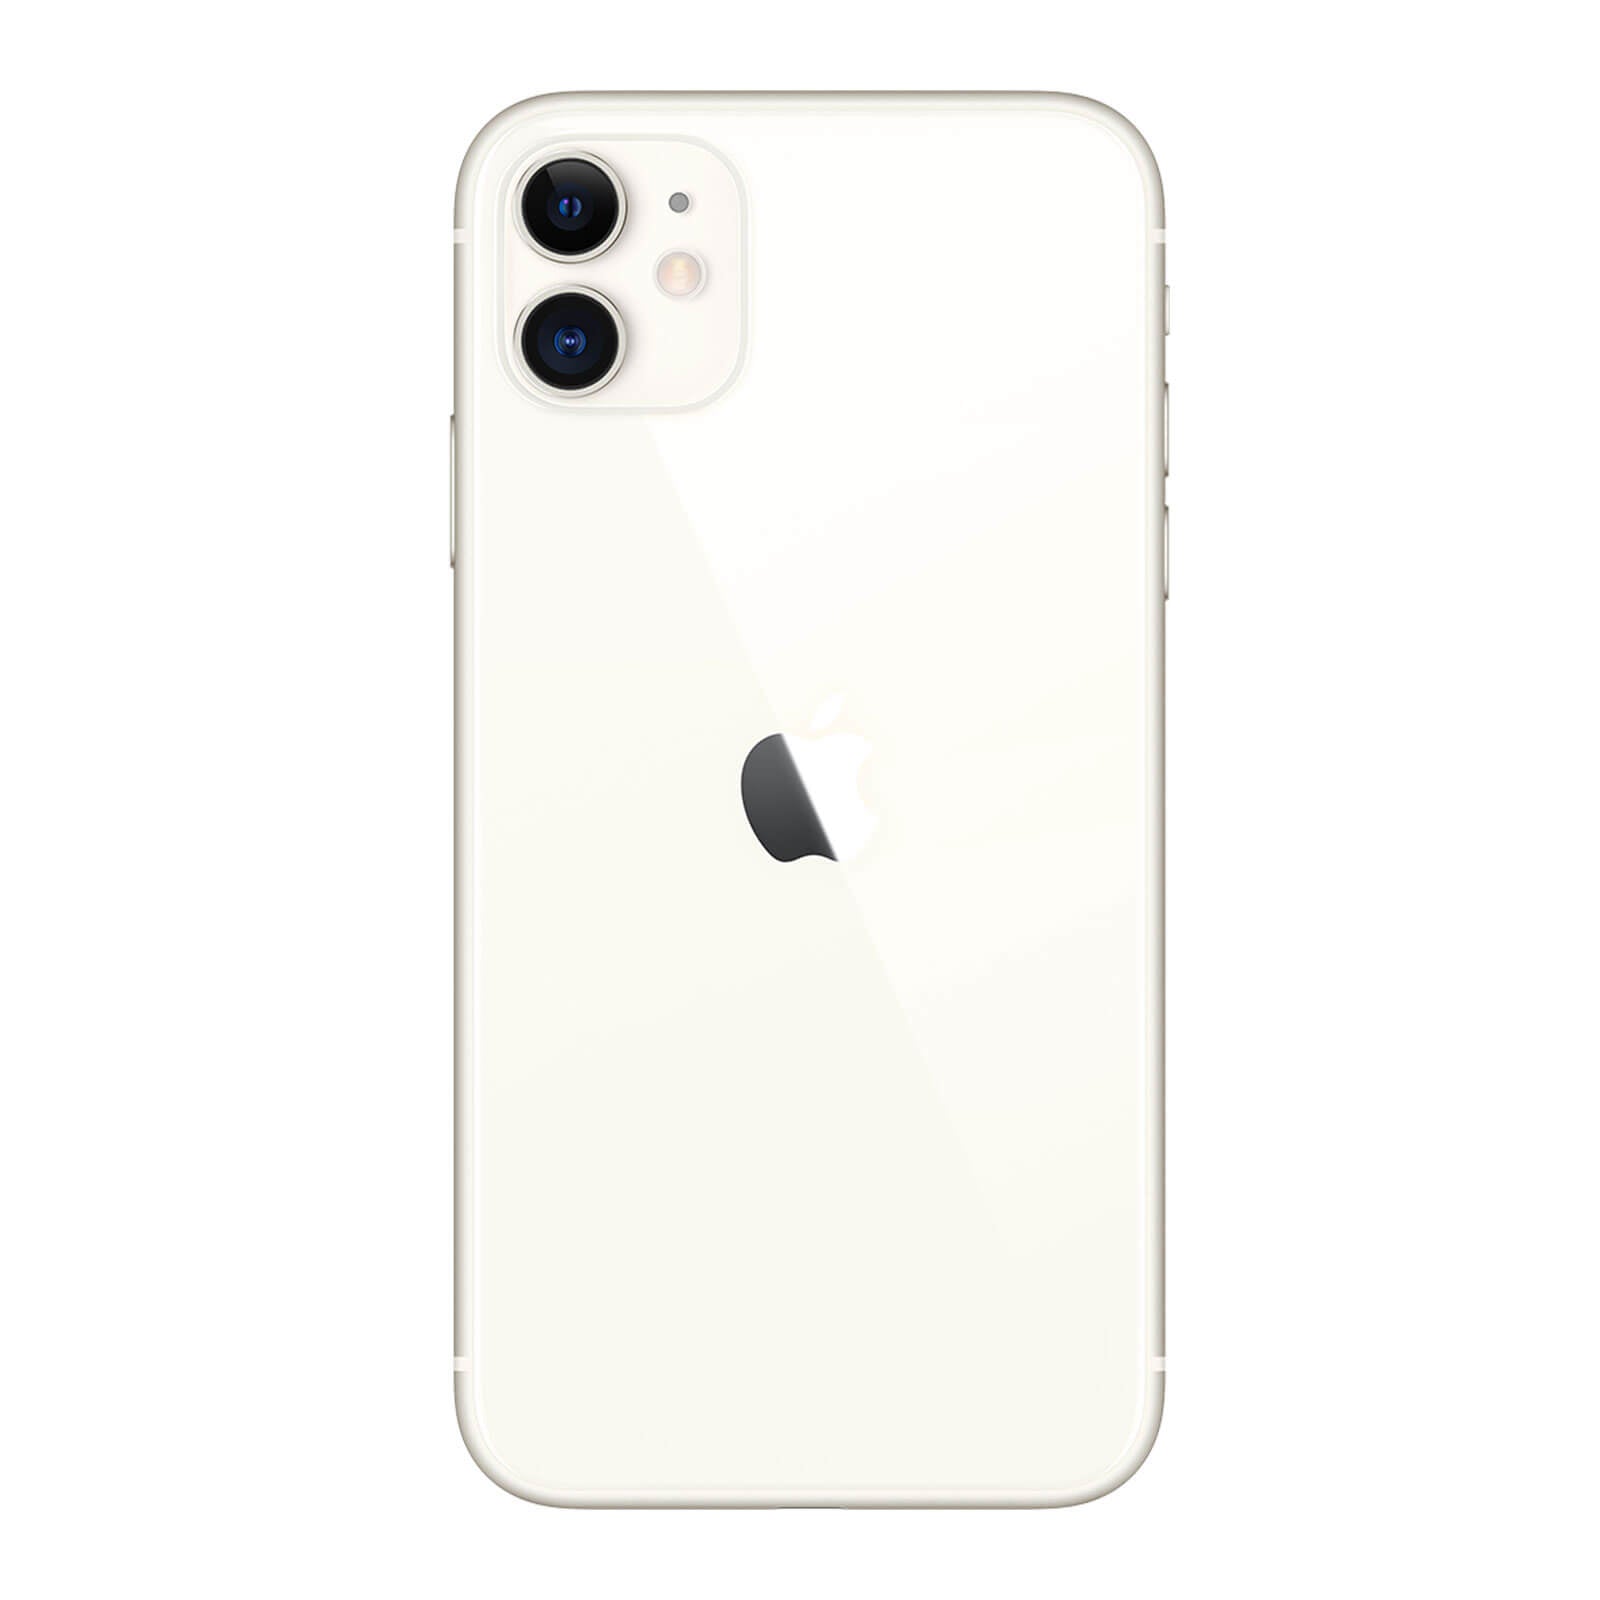 Apple iPhone 11 64GB White Good - Verizon